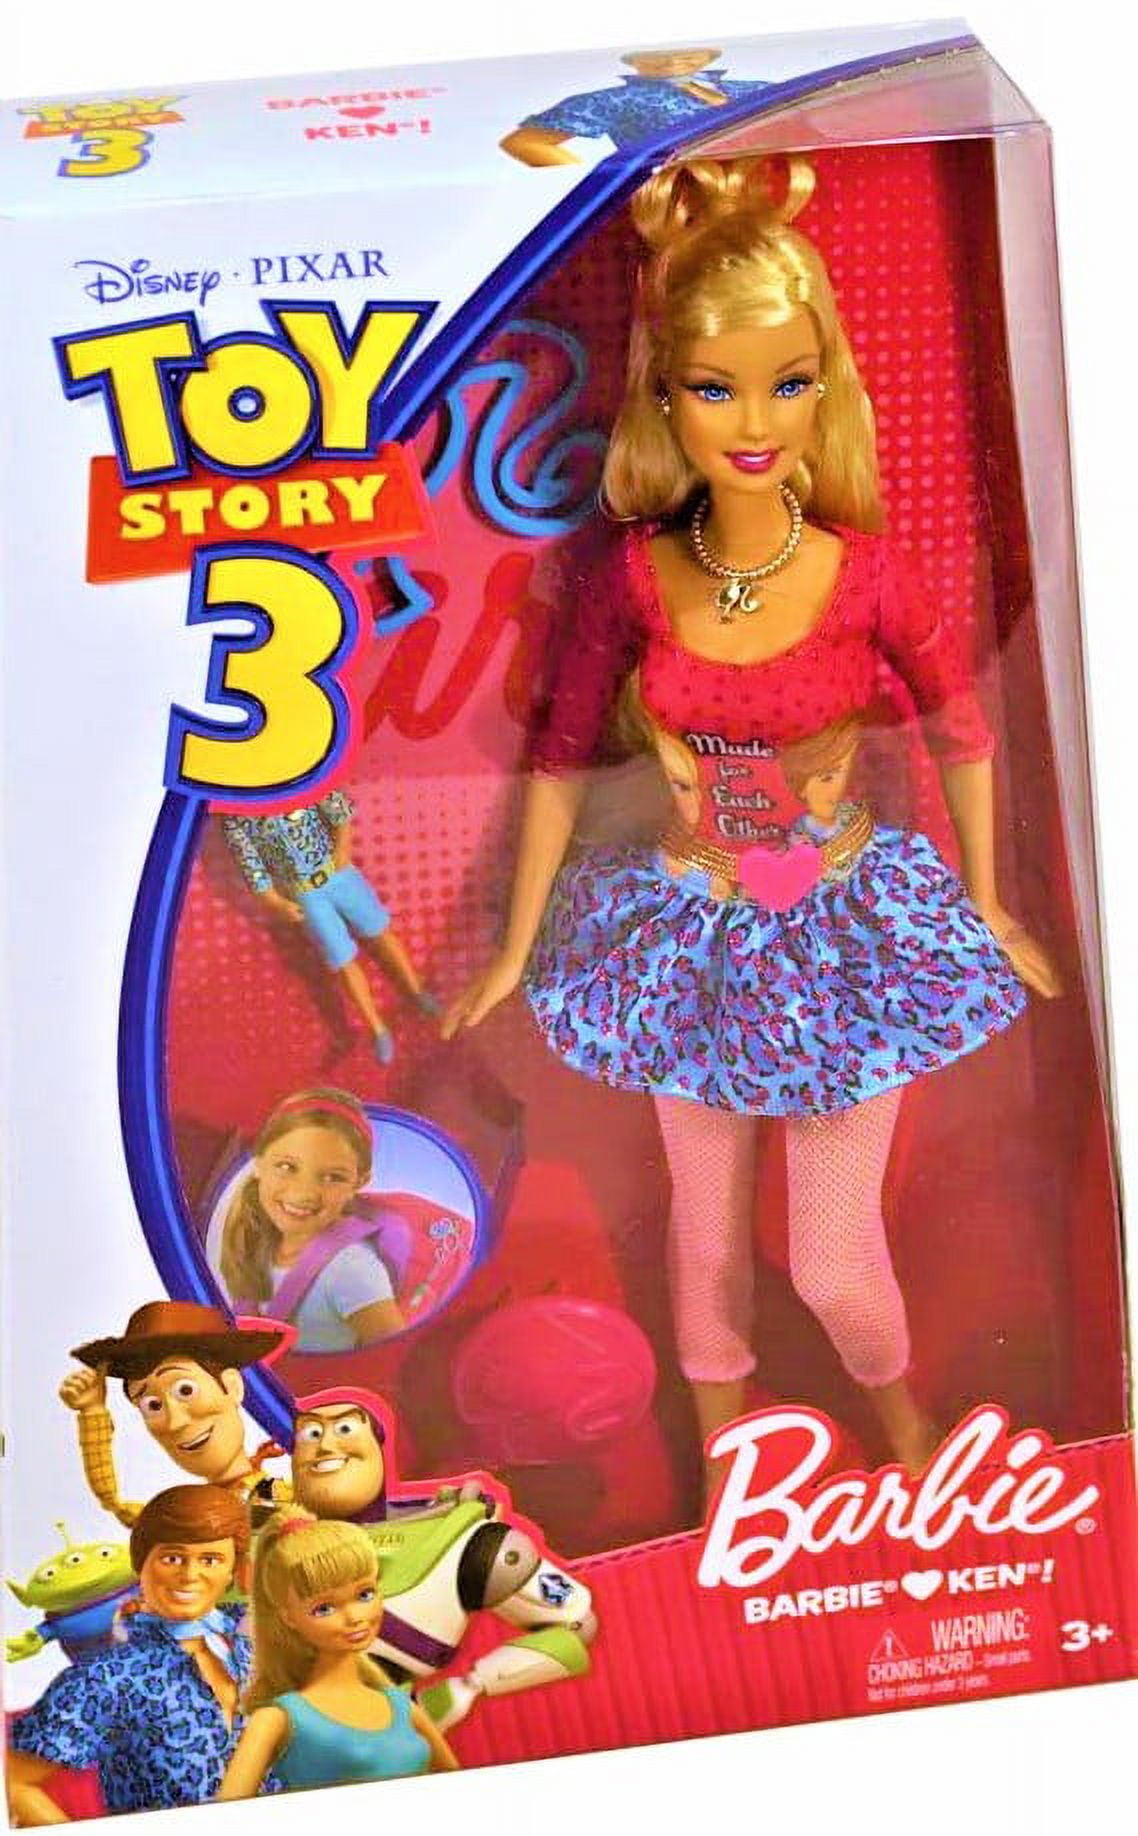 Toy Story 3 Barbie Loves Ken Fashion